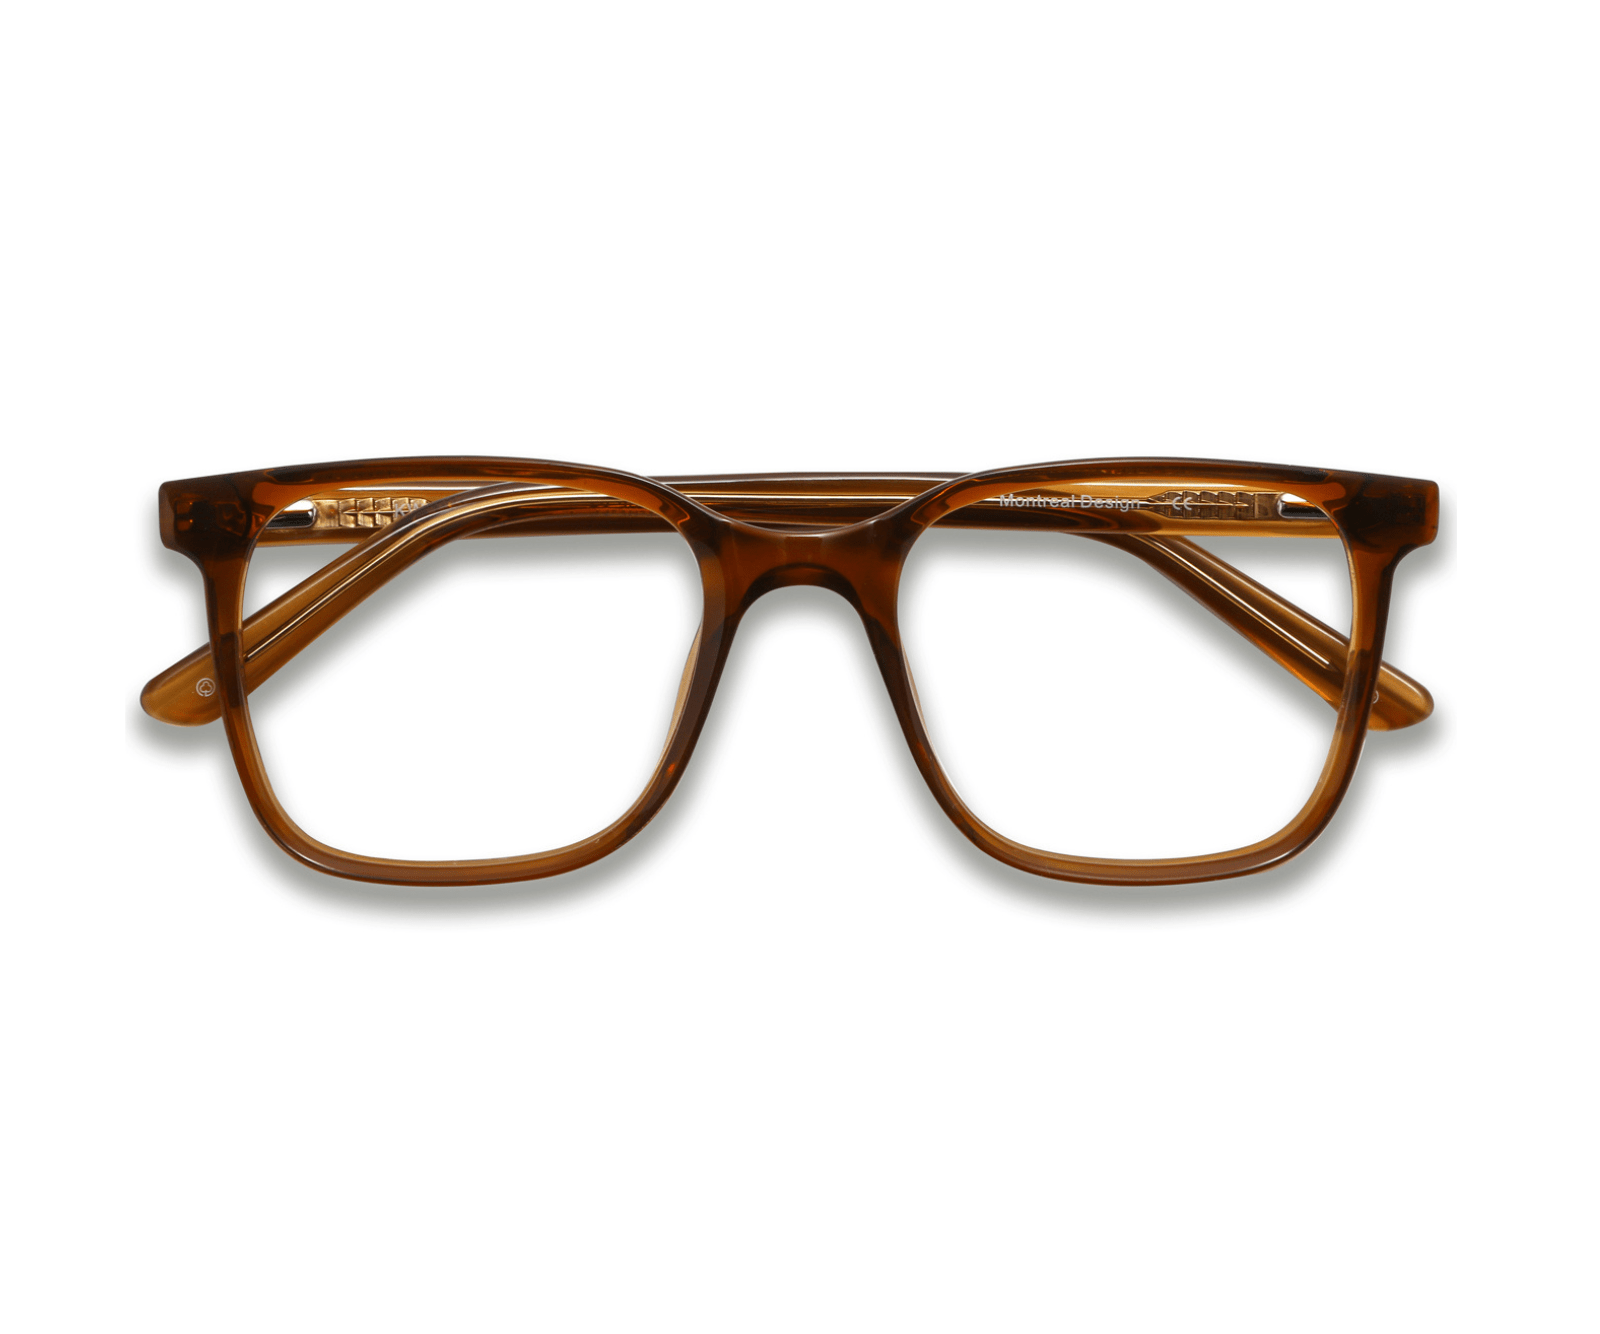 Kraywoods Hazel, Retro Square Sunglasses made from Walnut Wood with Gradient Polarized Lenses, 100% UV Protection